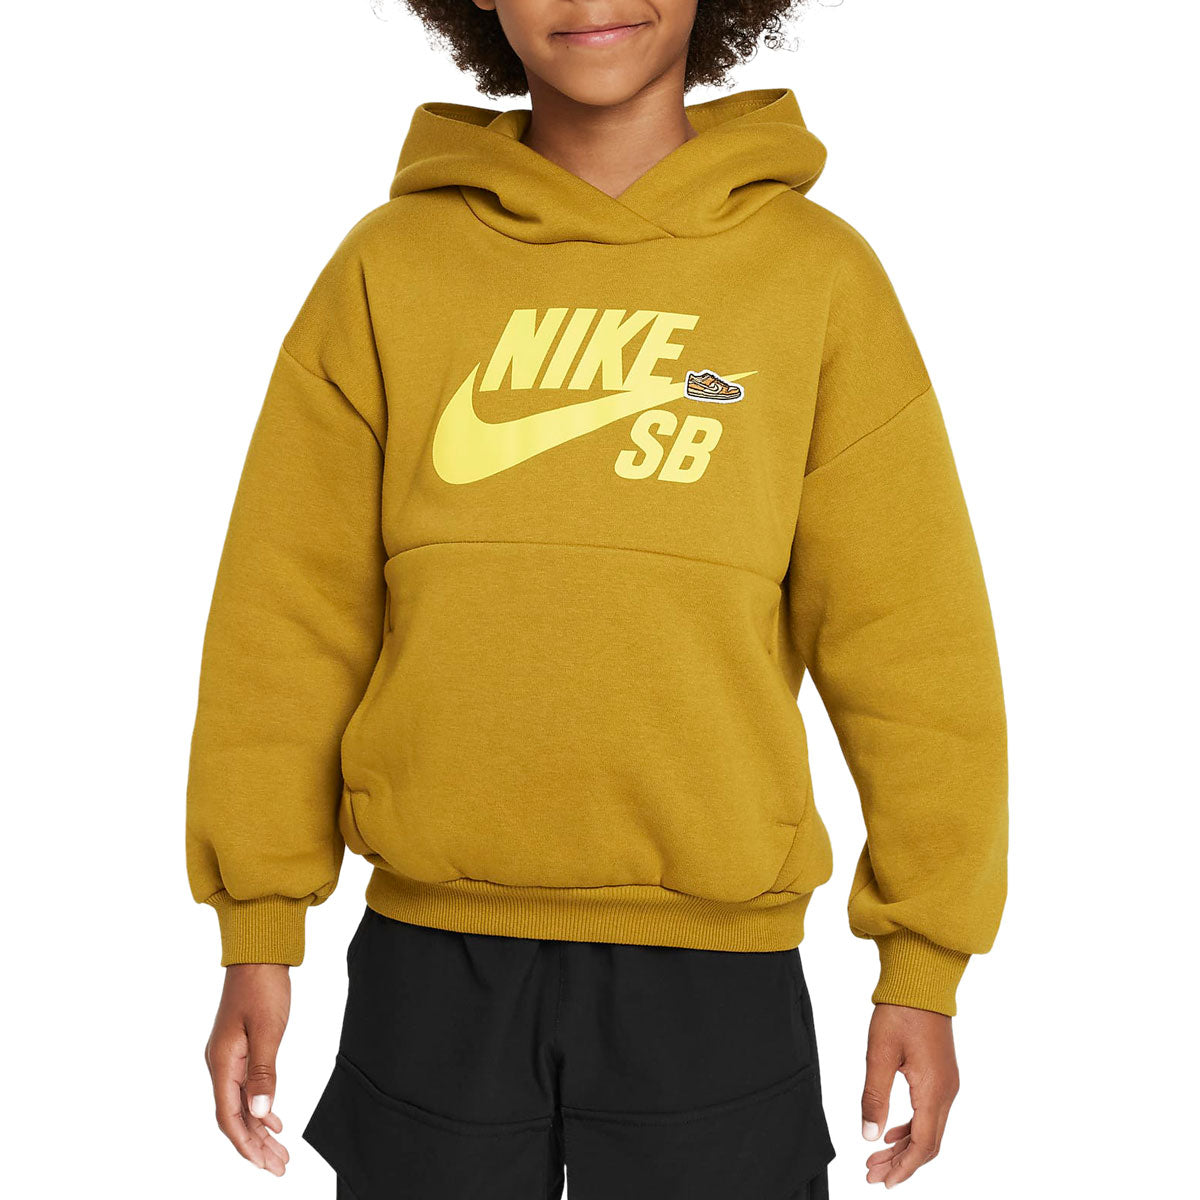 Nike SB Youth Icon Hoodie - Bronzine/Vivid Sulfur image 1